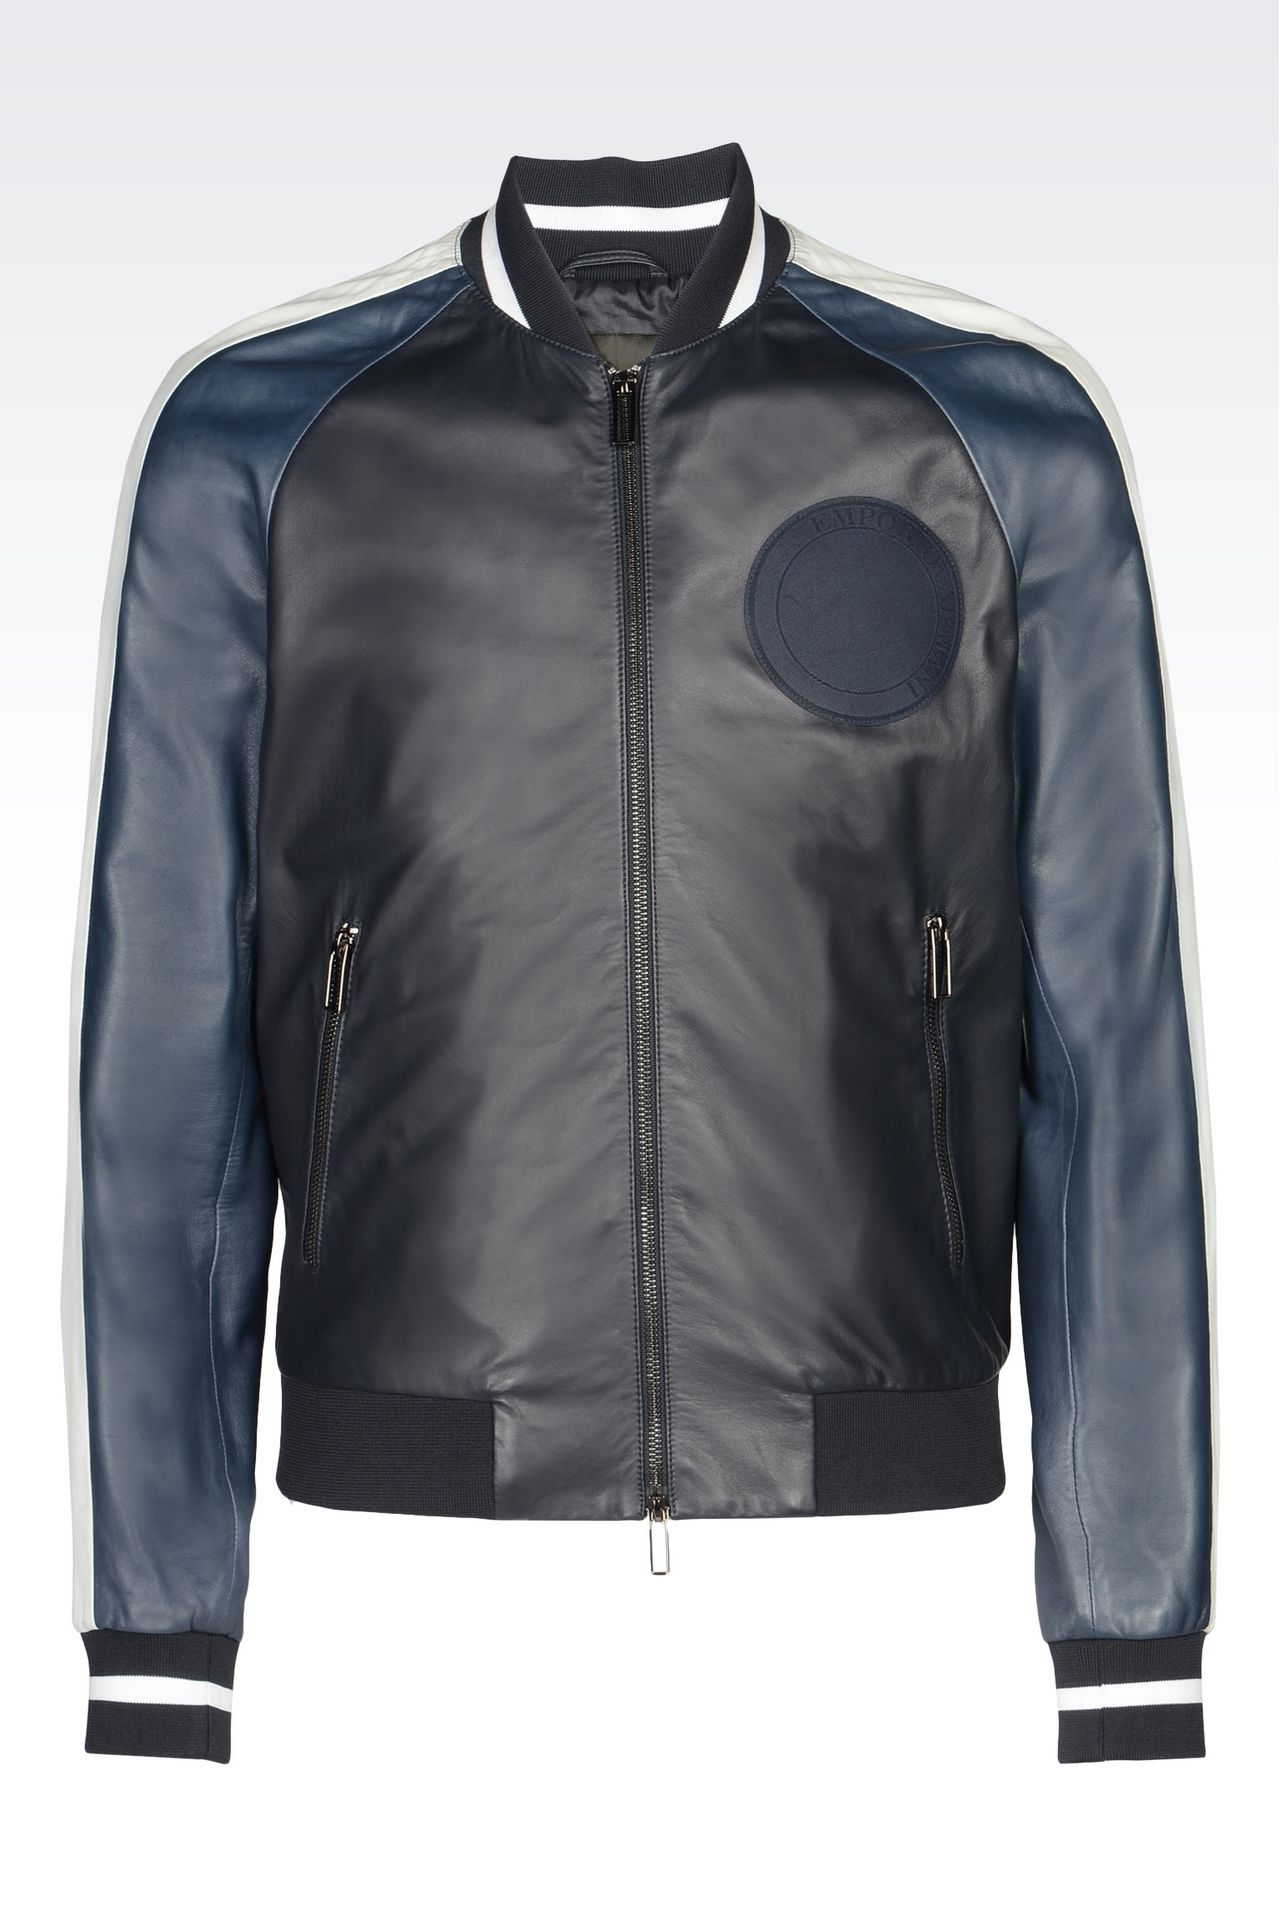 armani jackets leatherwear: light leather jackets men by armani - 0 UWKLTZX